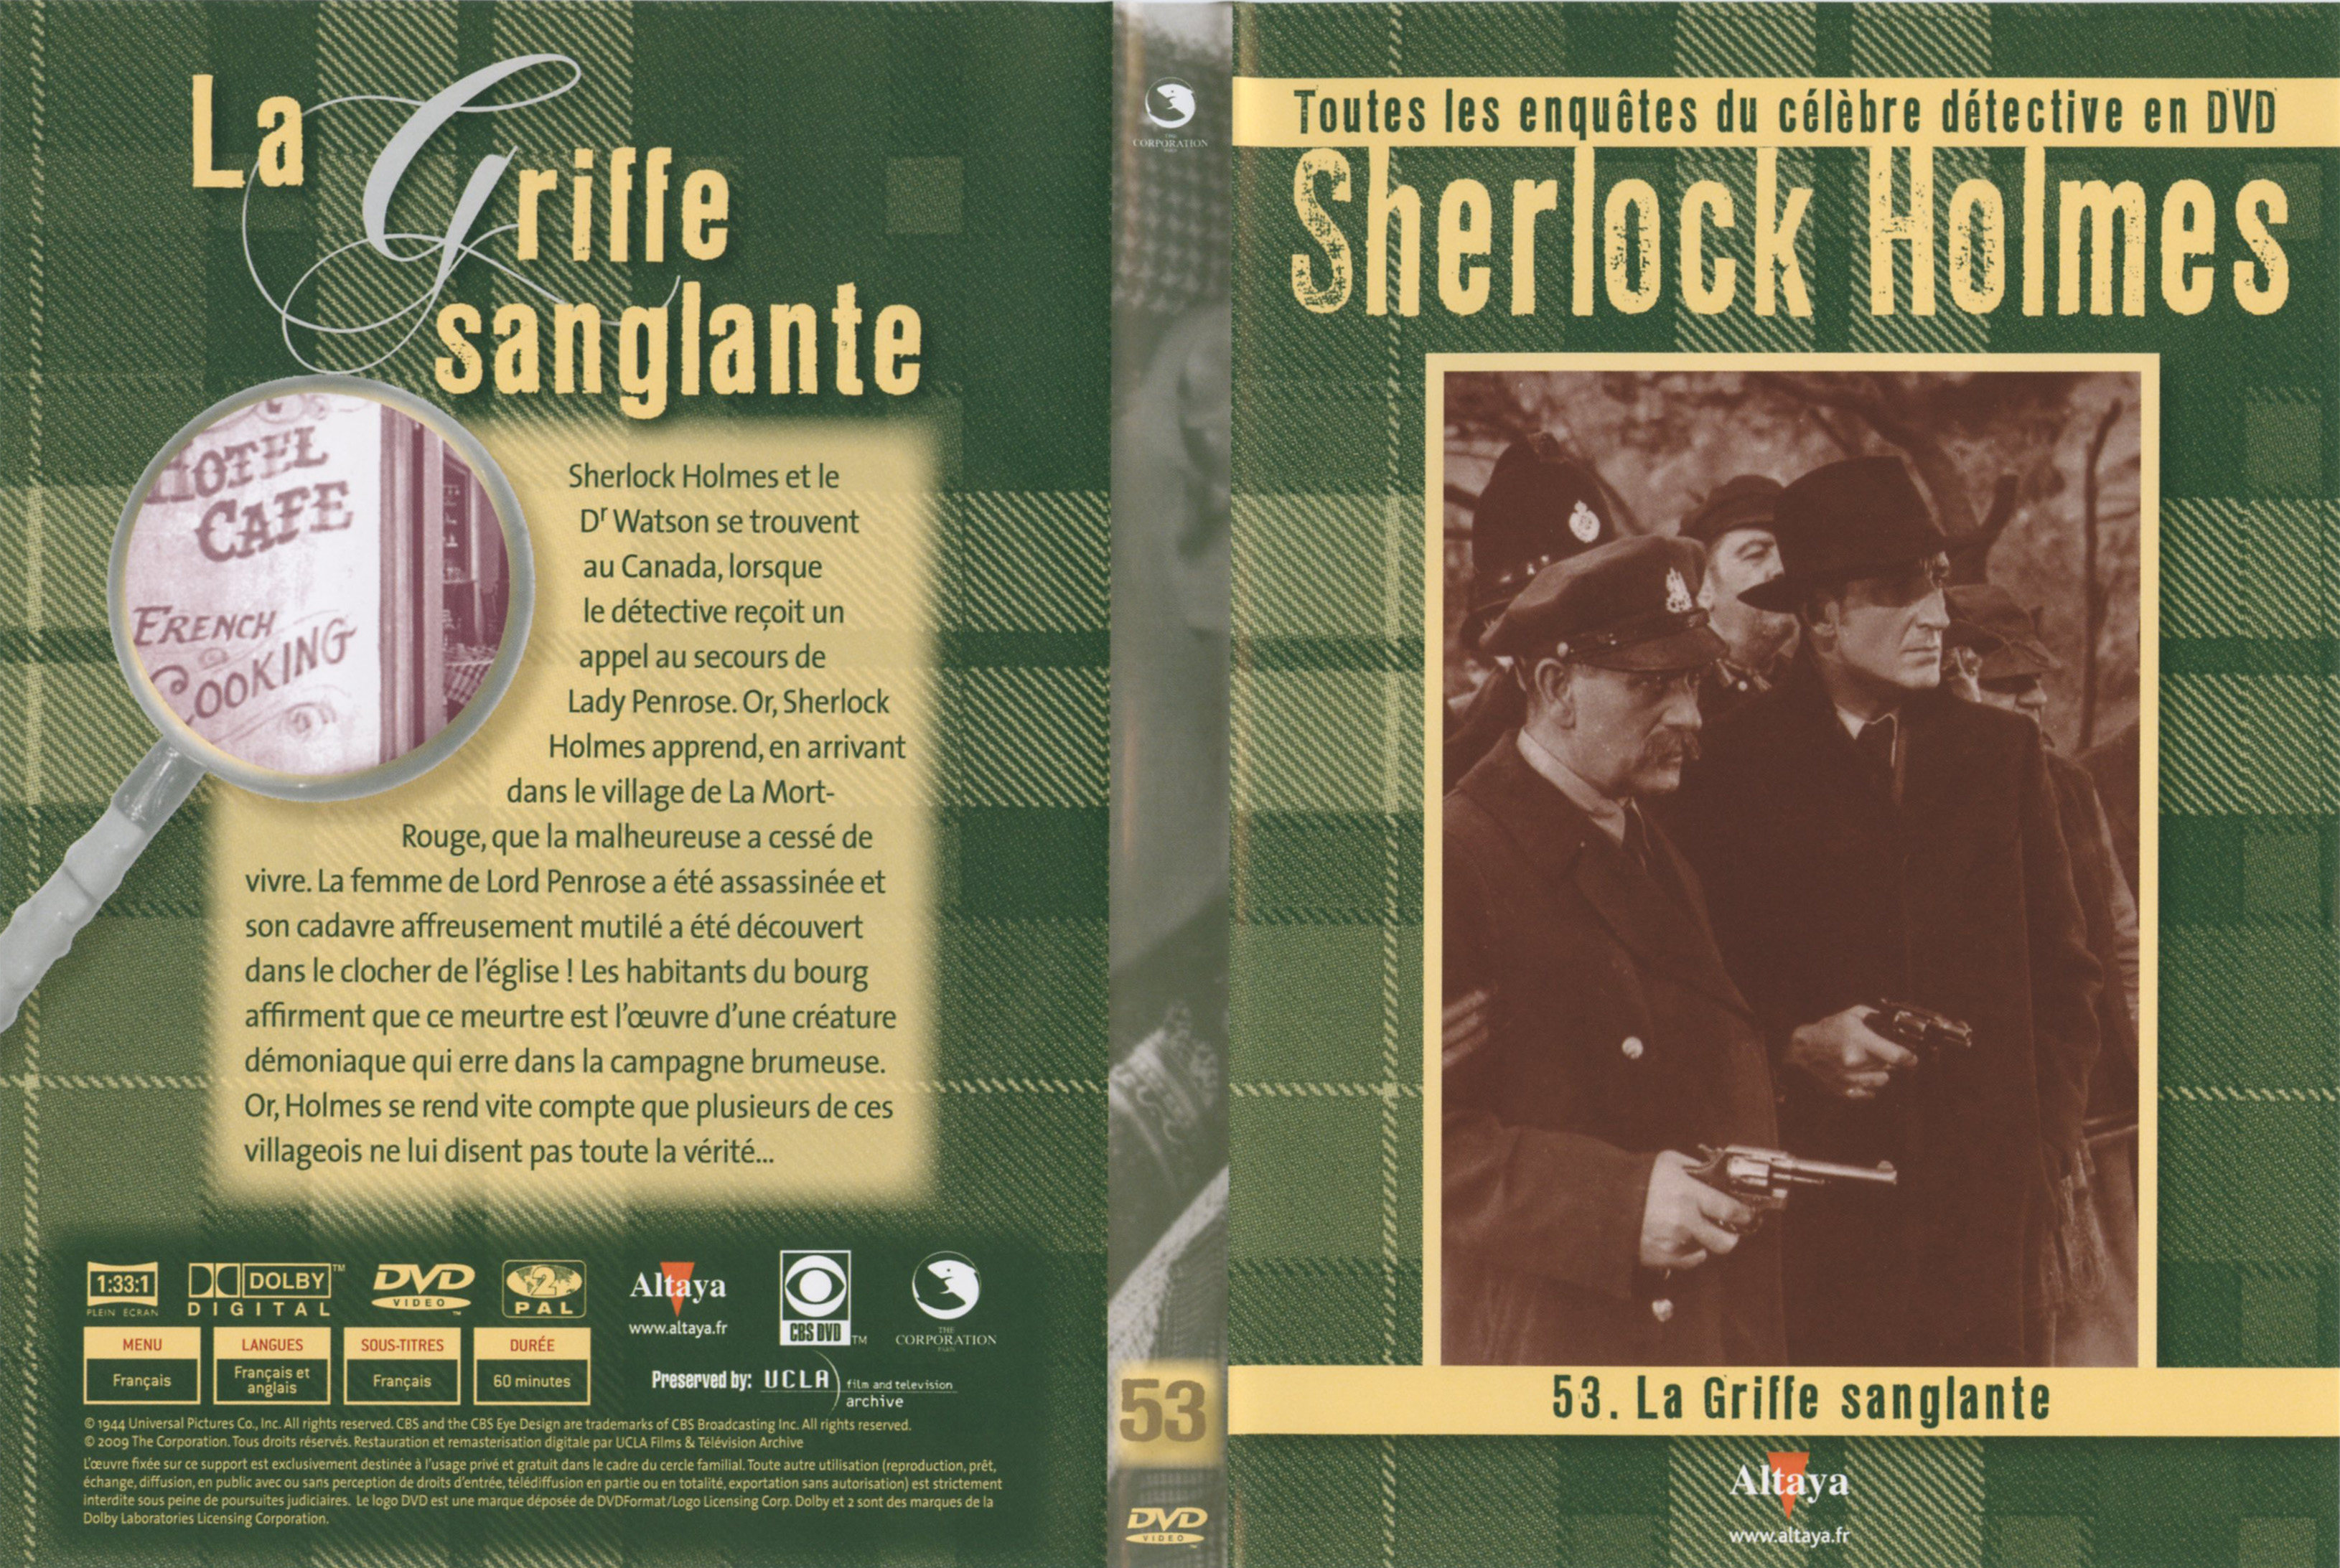 Jaquette DVD Sherlock Holmes La griffe sanglante